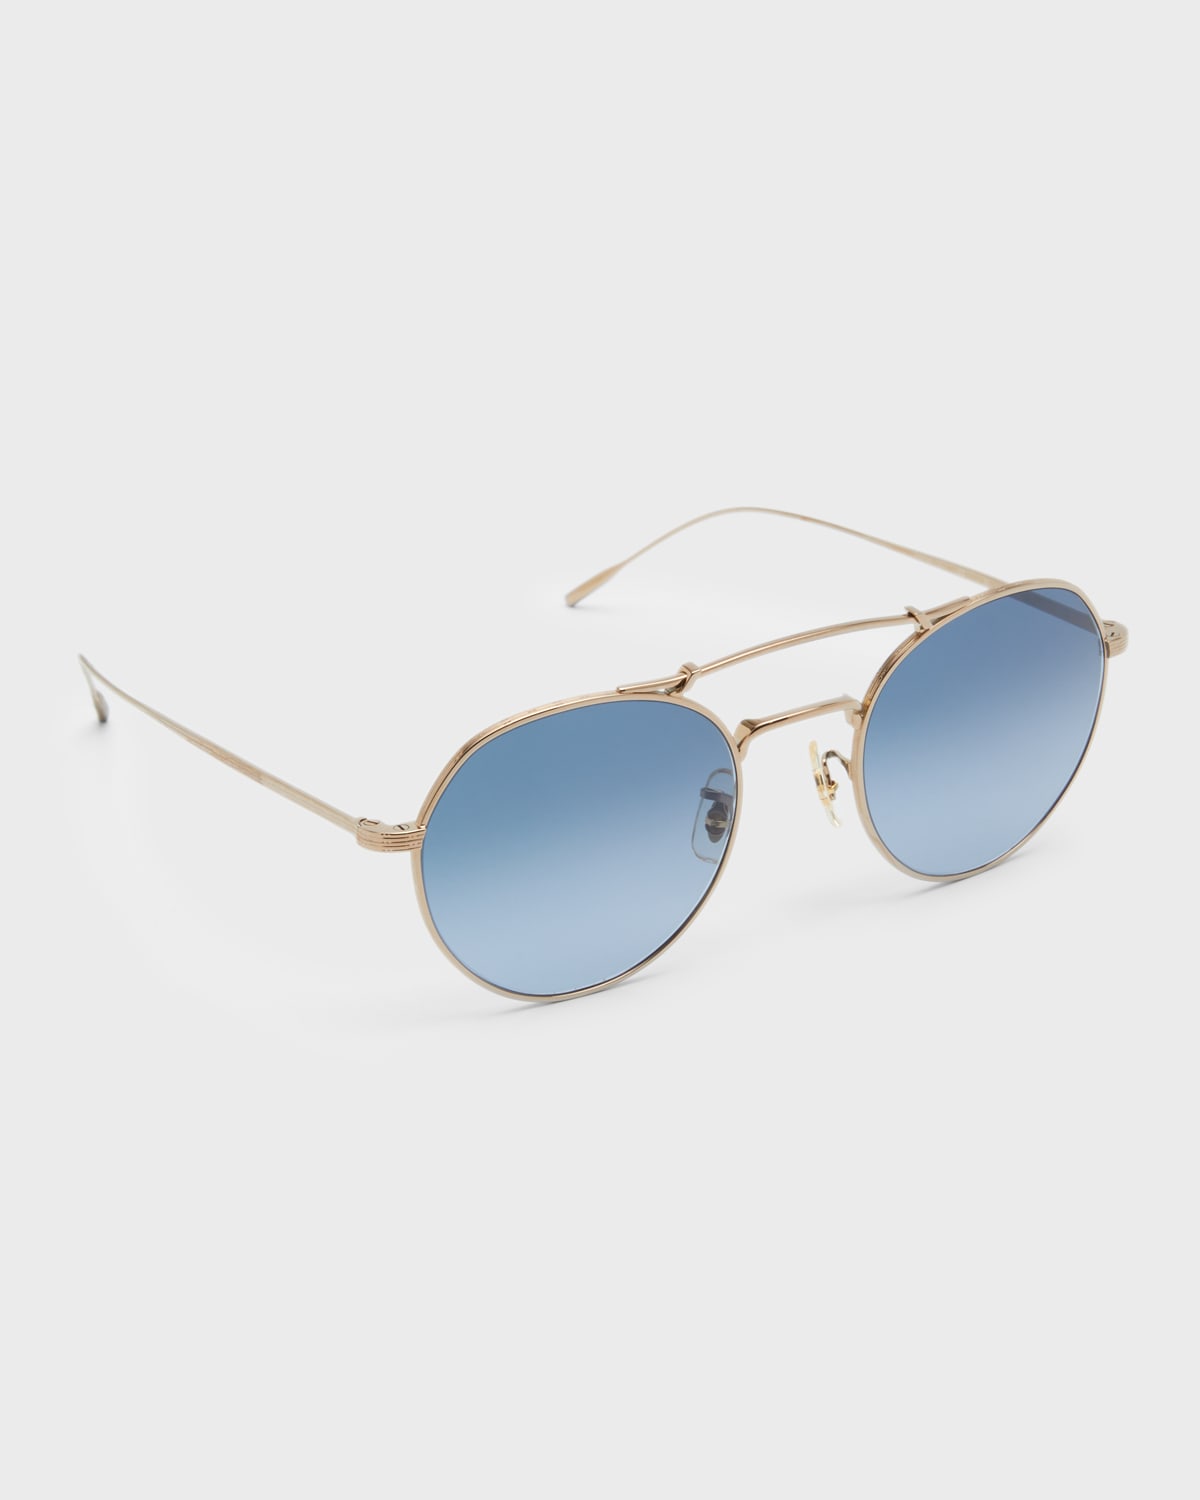 The Reymont Titanium Aviator Sunglasses